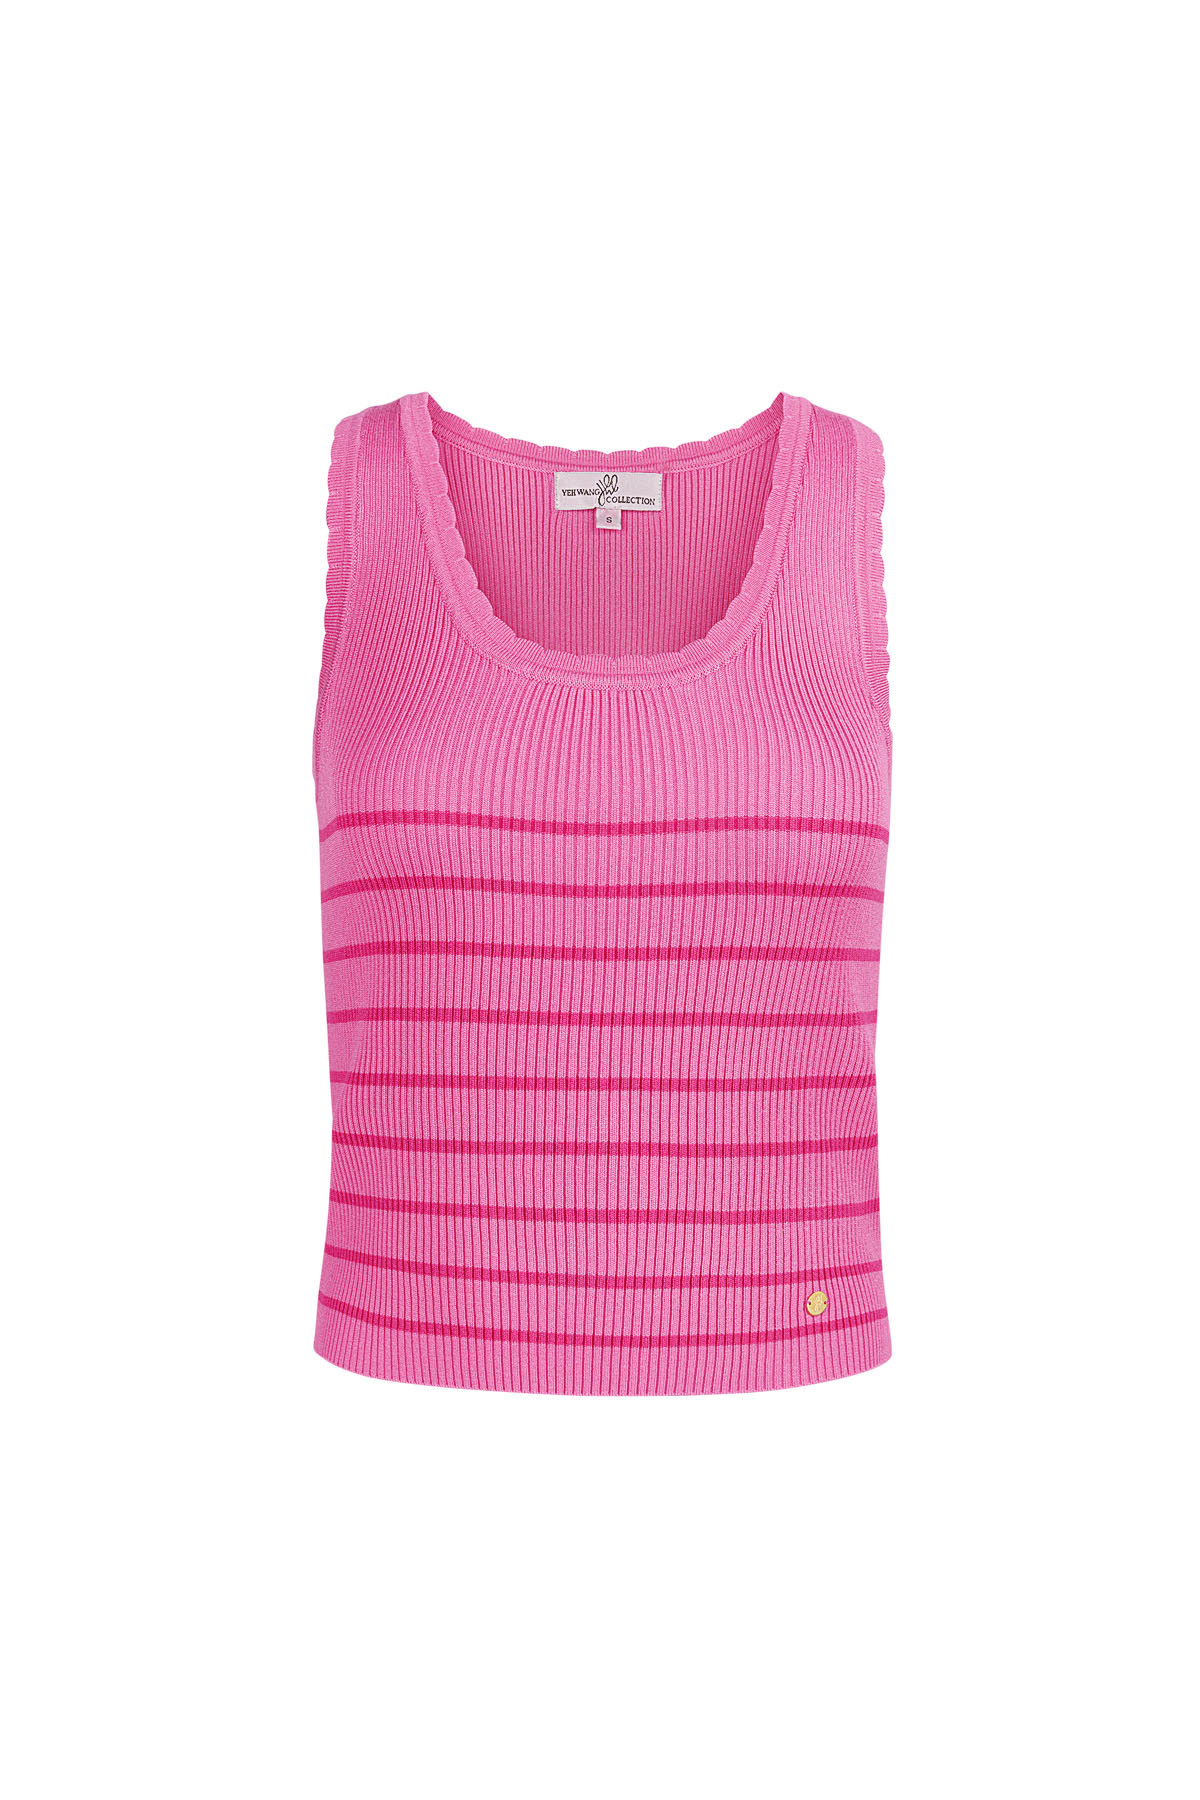 Striped, sleeveless top with classic edge medium – pink